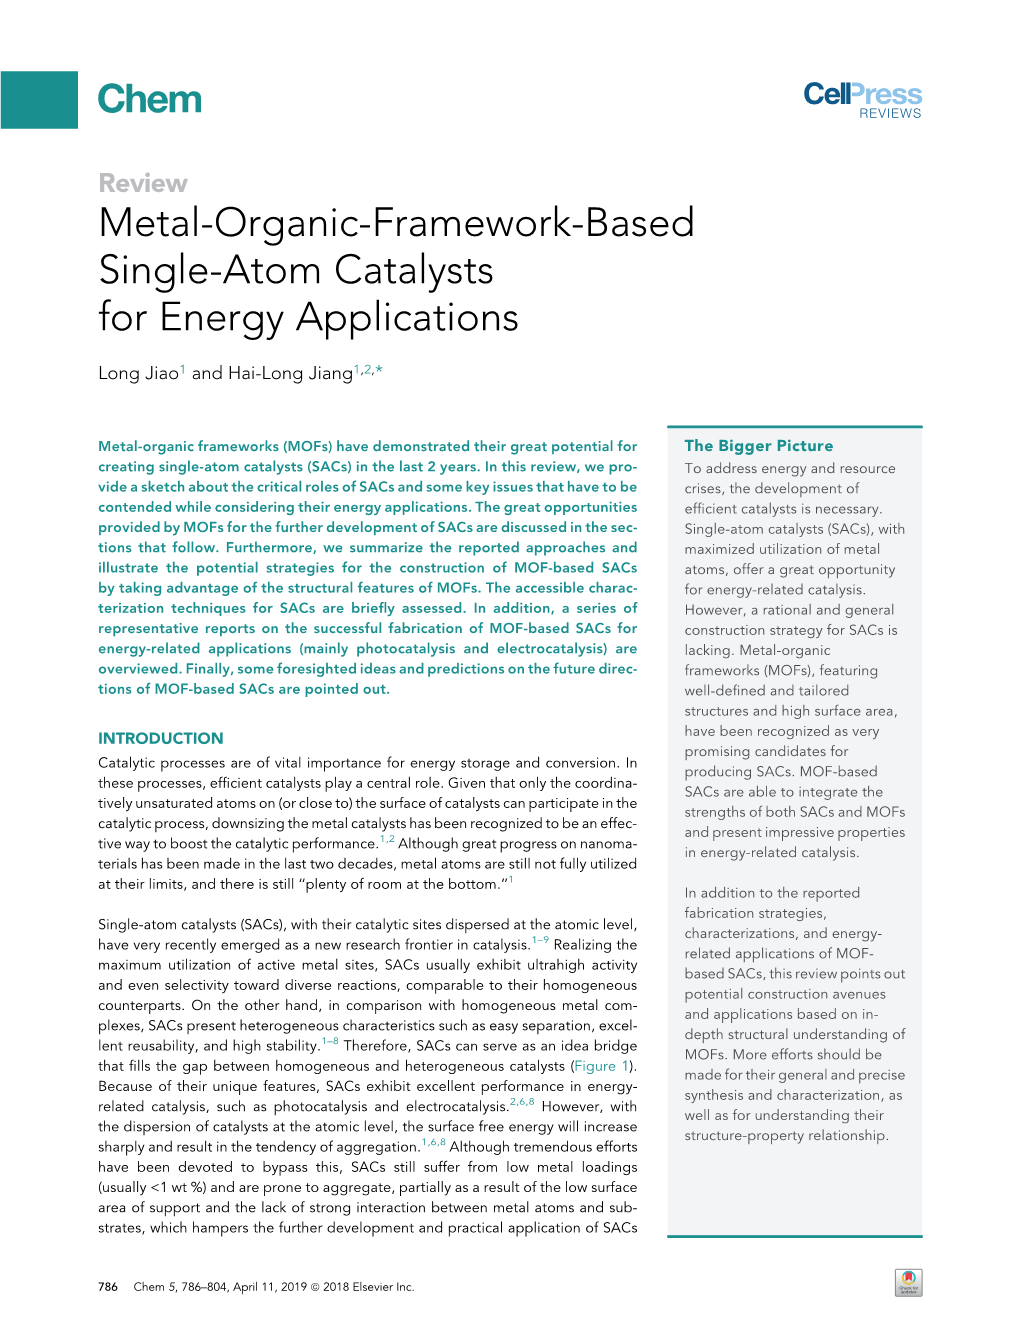 Metal-Organic-Framework-Based Single-Atom Catalysts for Energy Applications